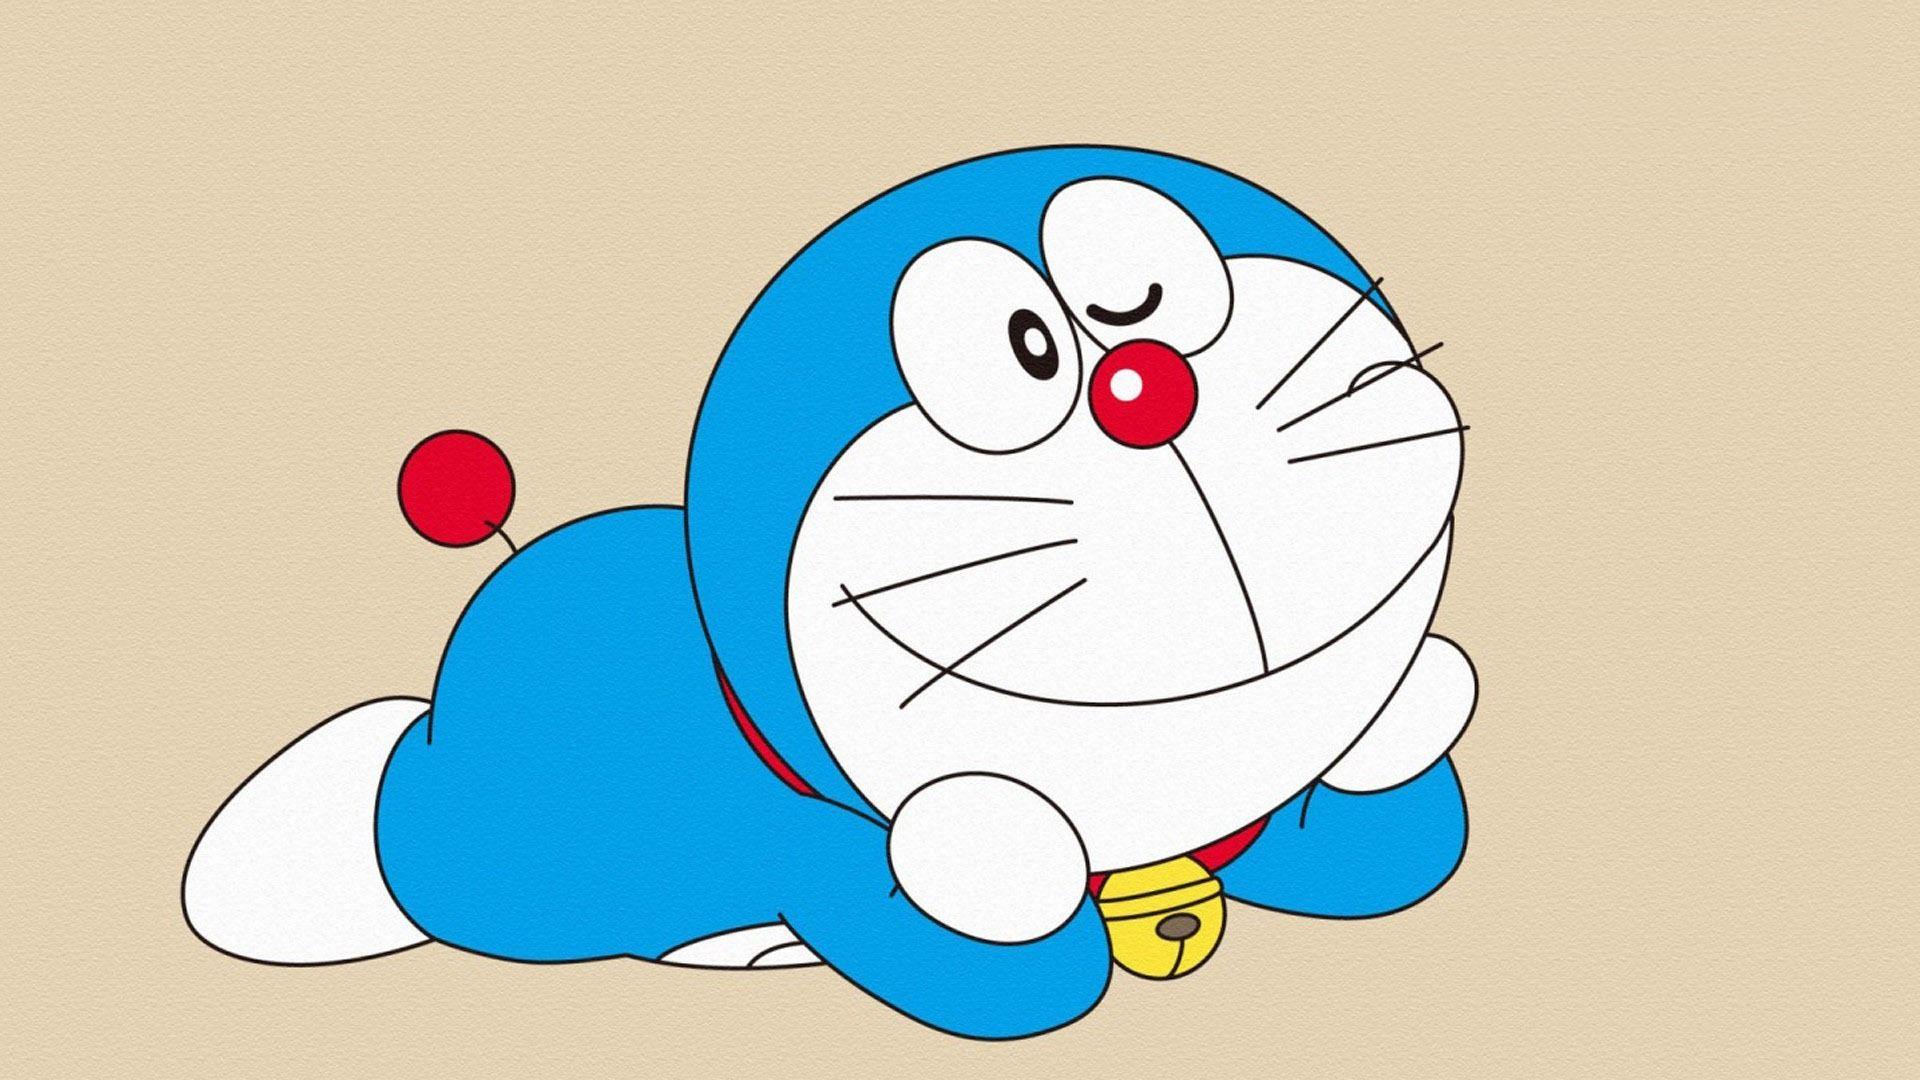 Doraemon HD Wallpapers - Wallpaper Cave